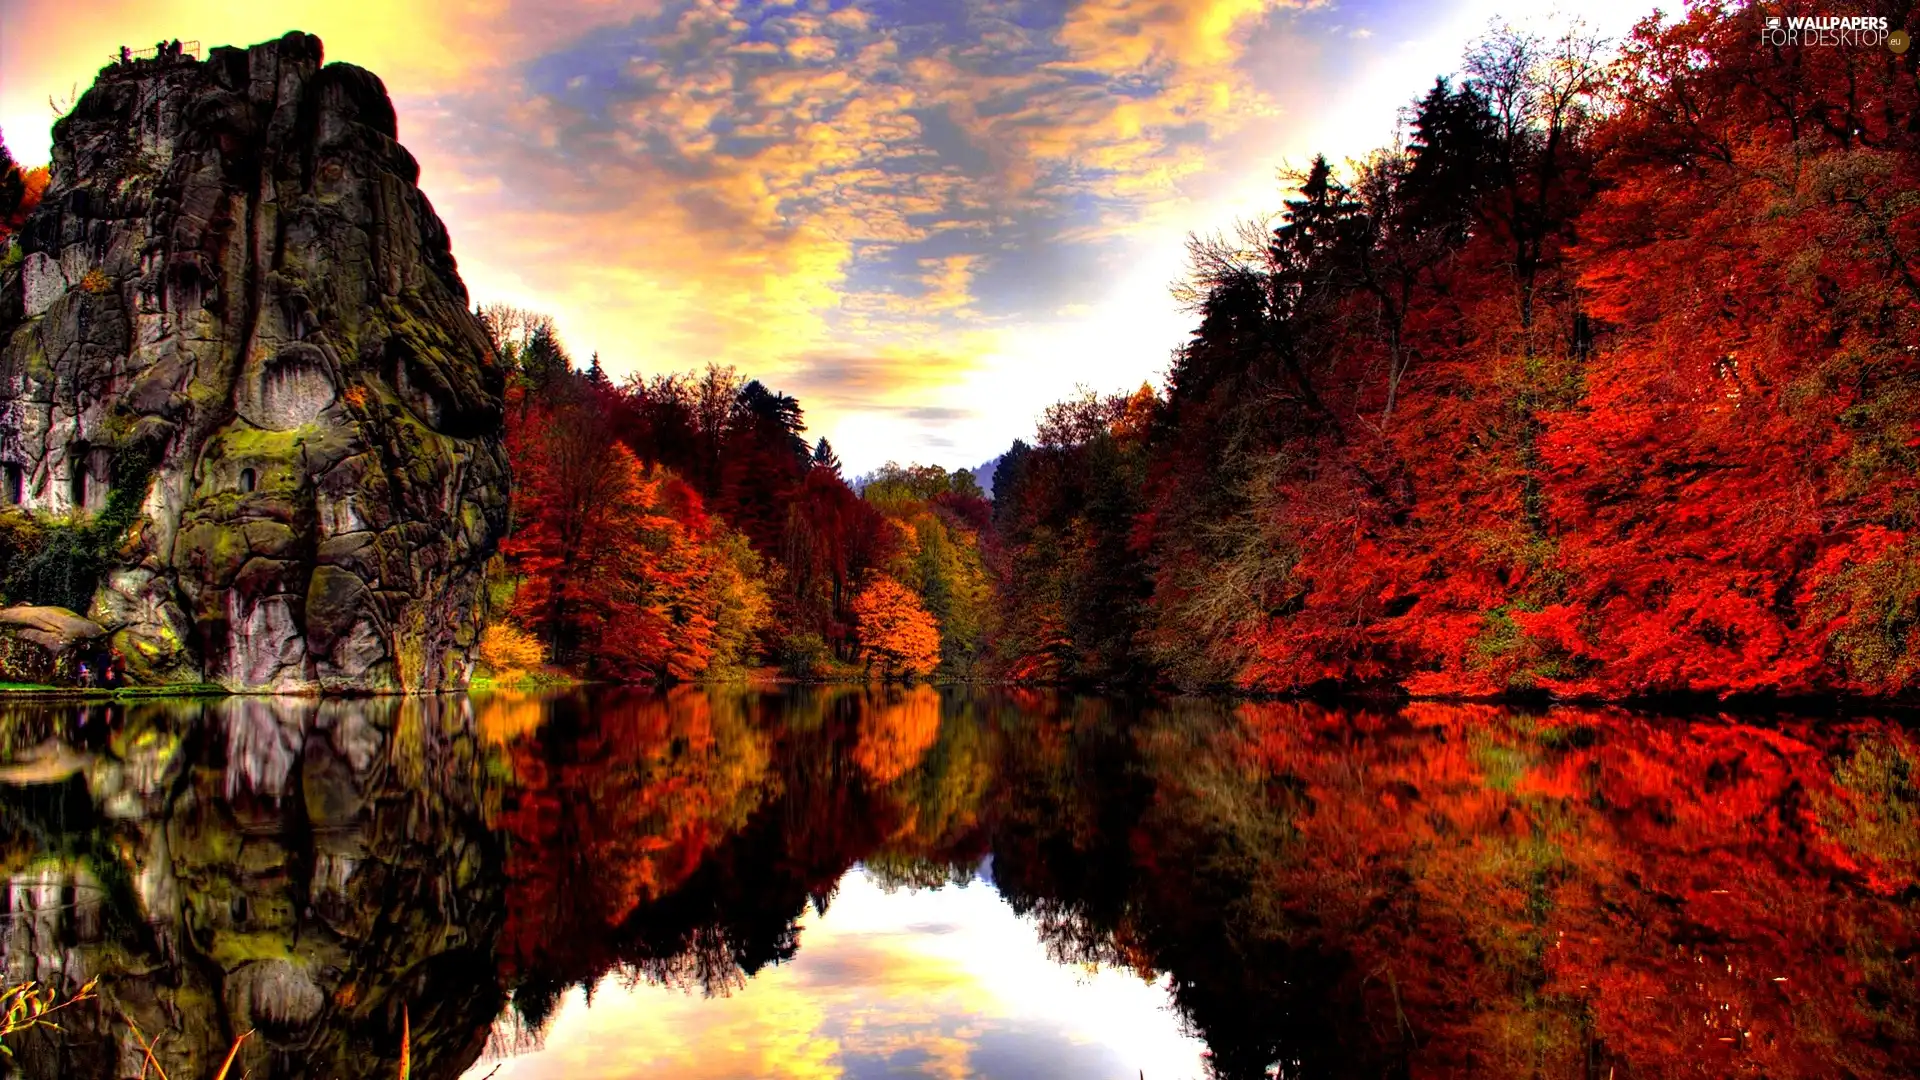 reflection, Mirror, Mountains, River, autumn